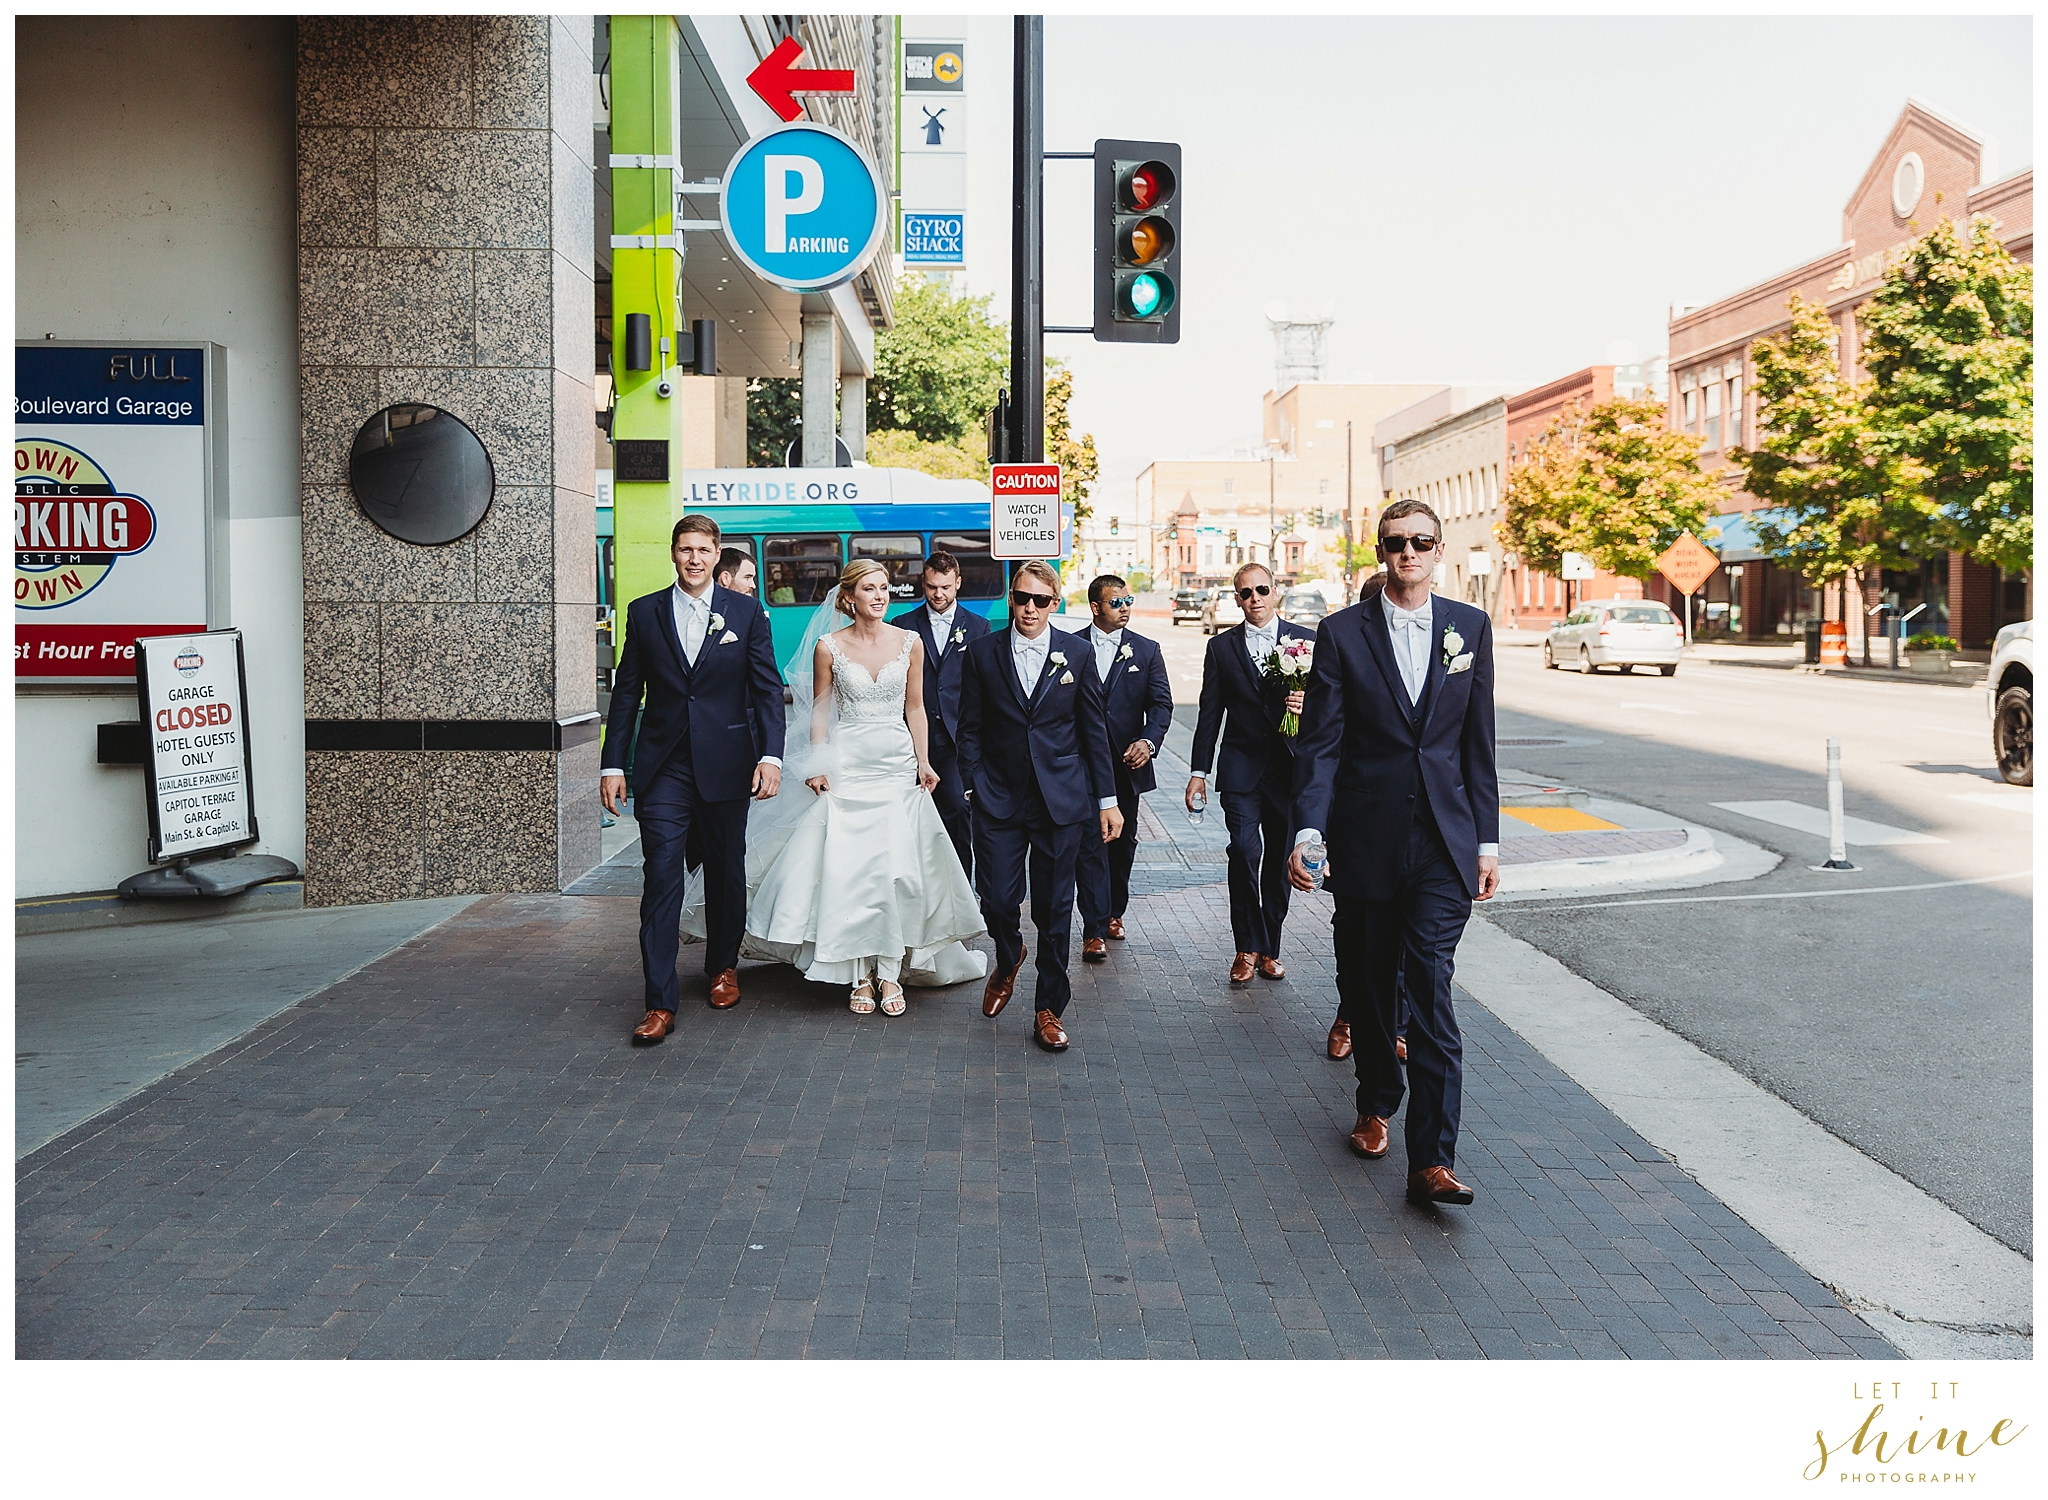 The Grove Hotel Boise Wedding 2017 Let it Shine Photography-9390.jpg